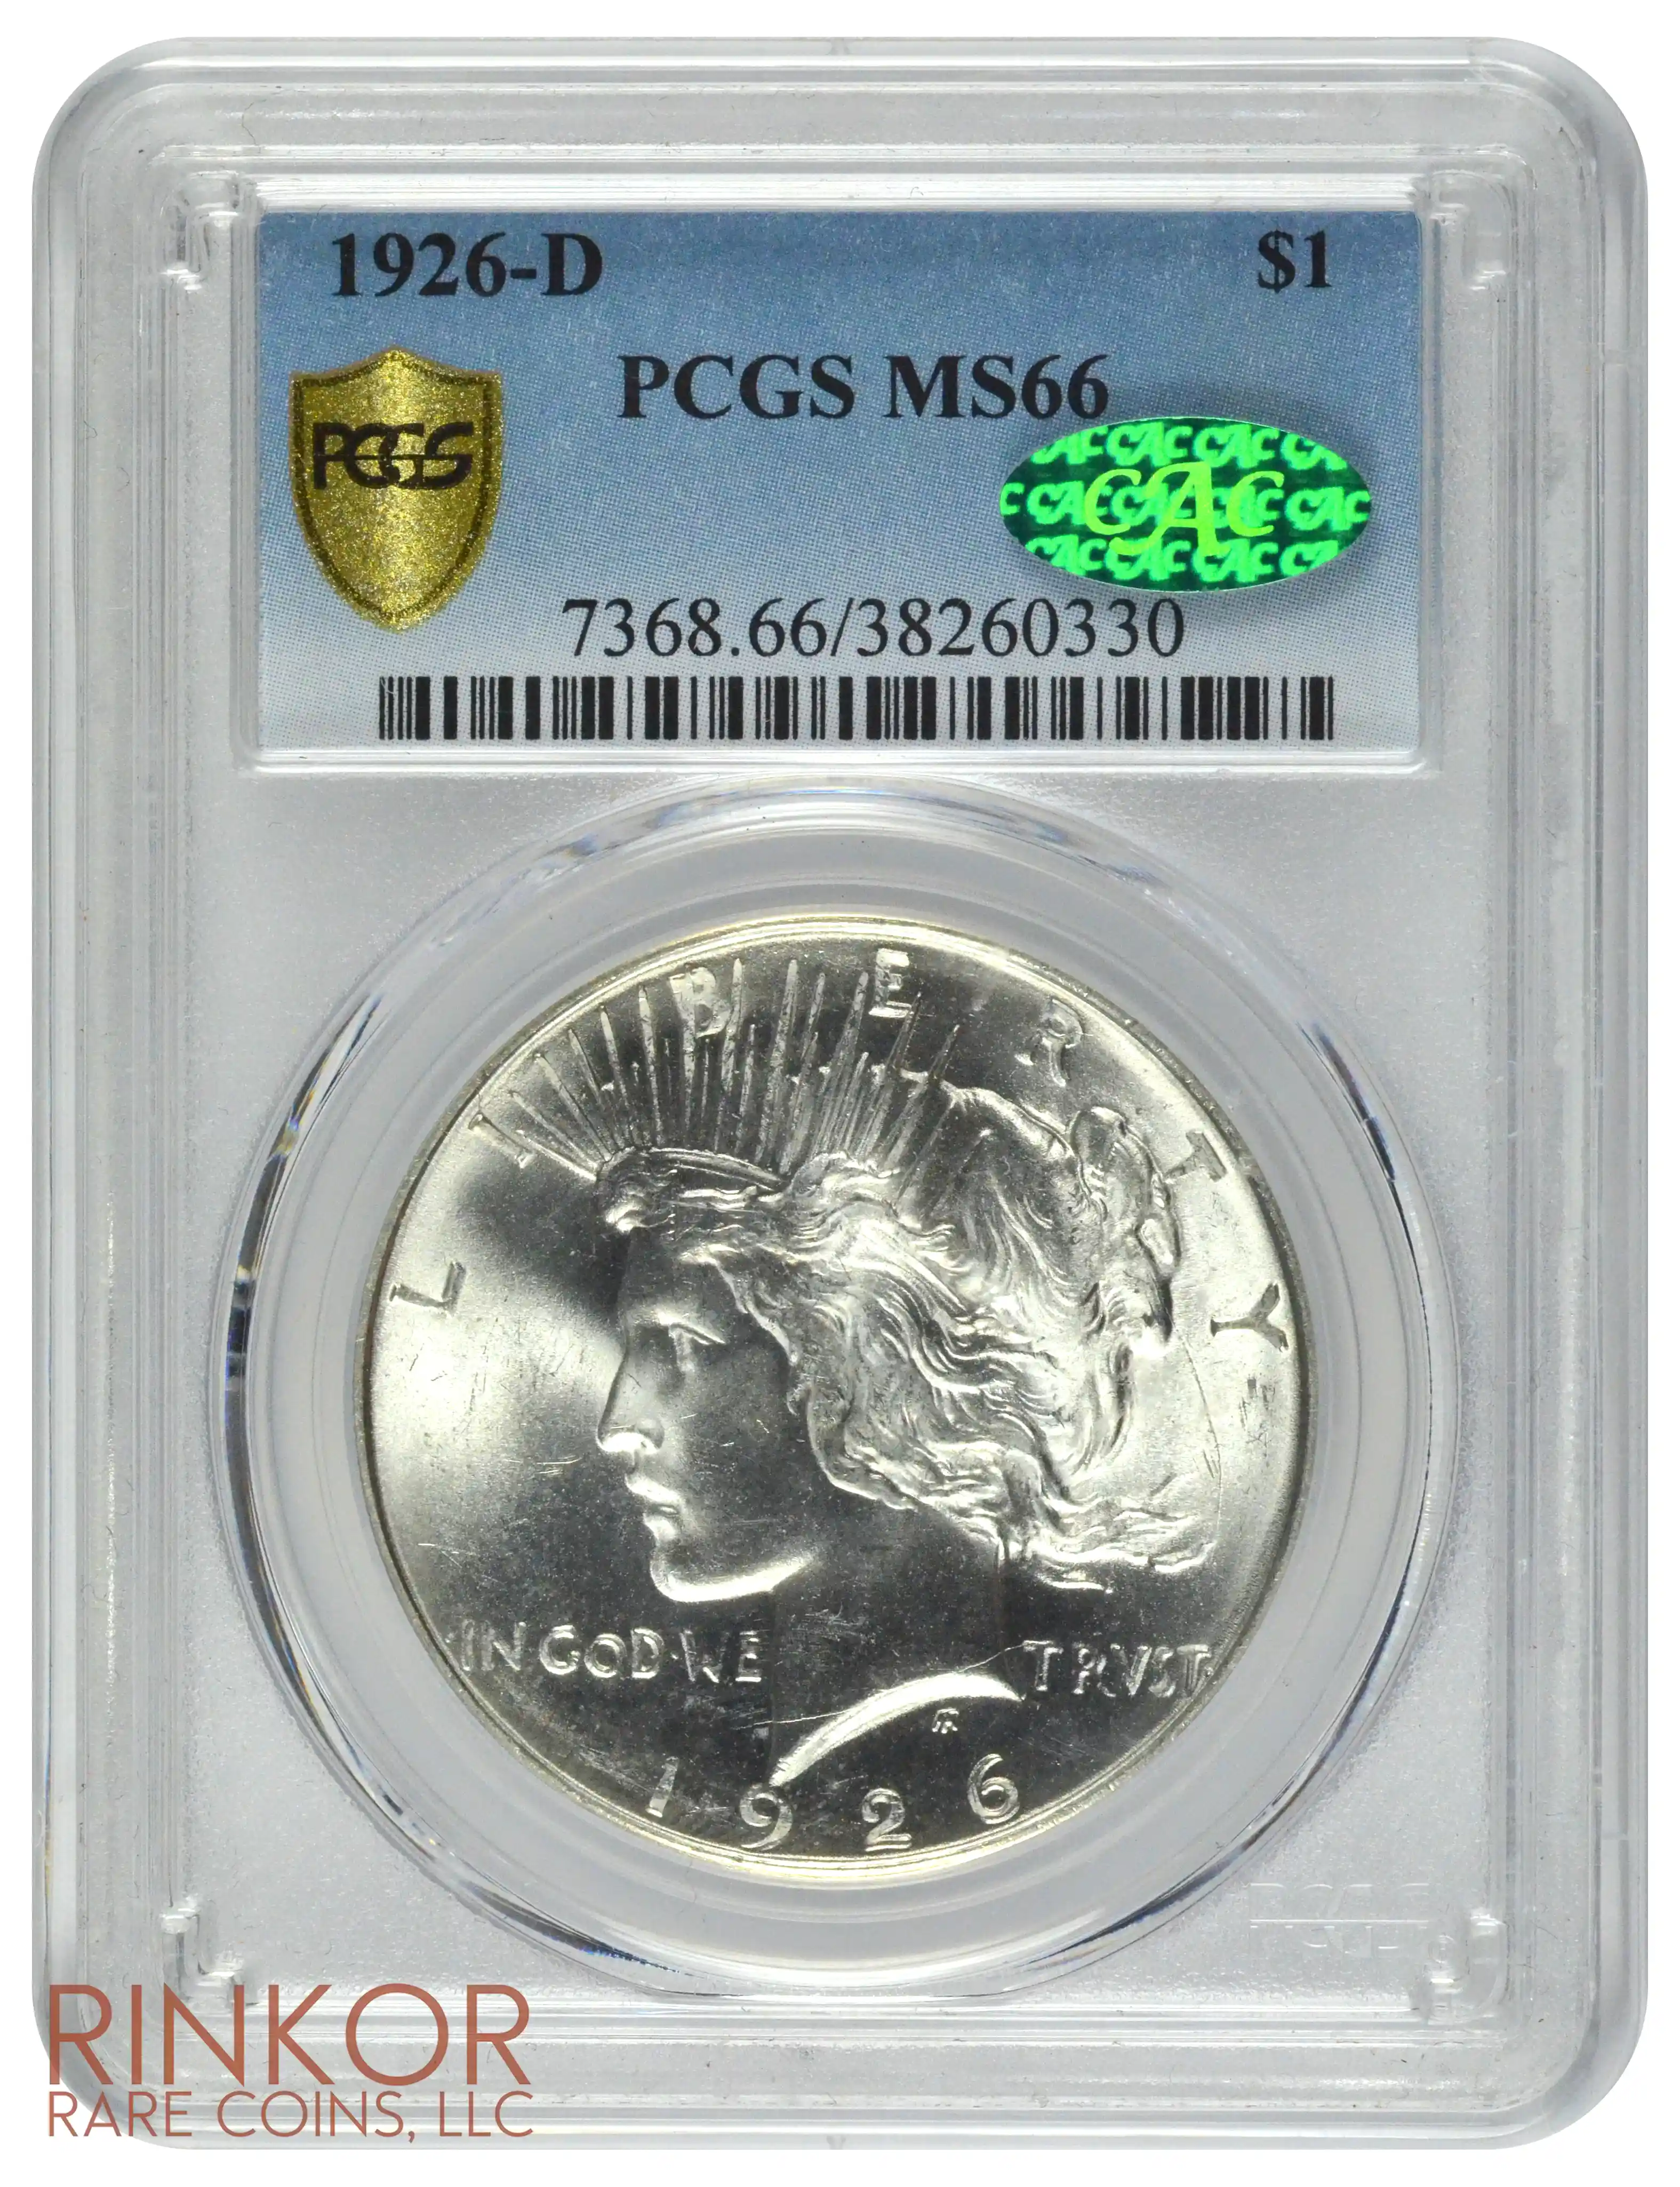 1926-D $1 PCGS